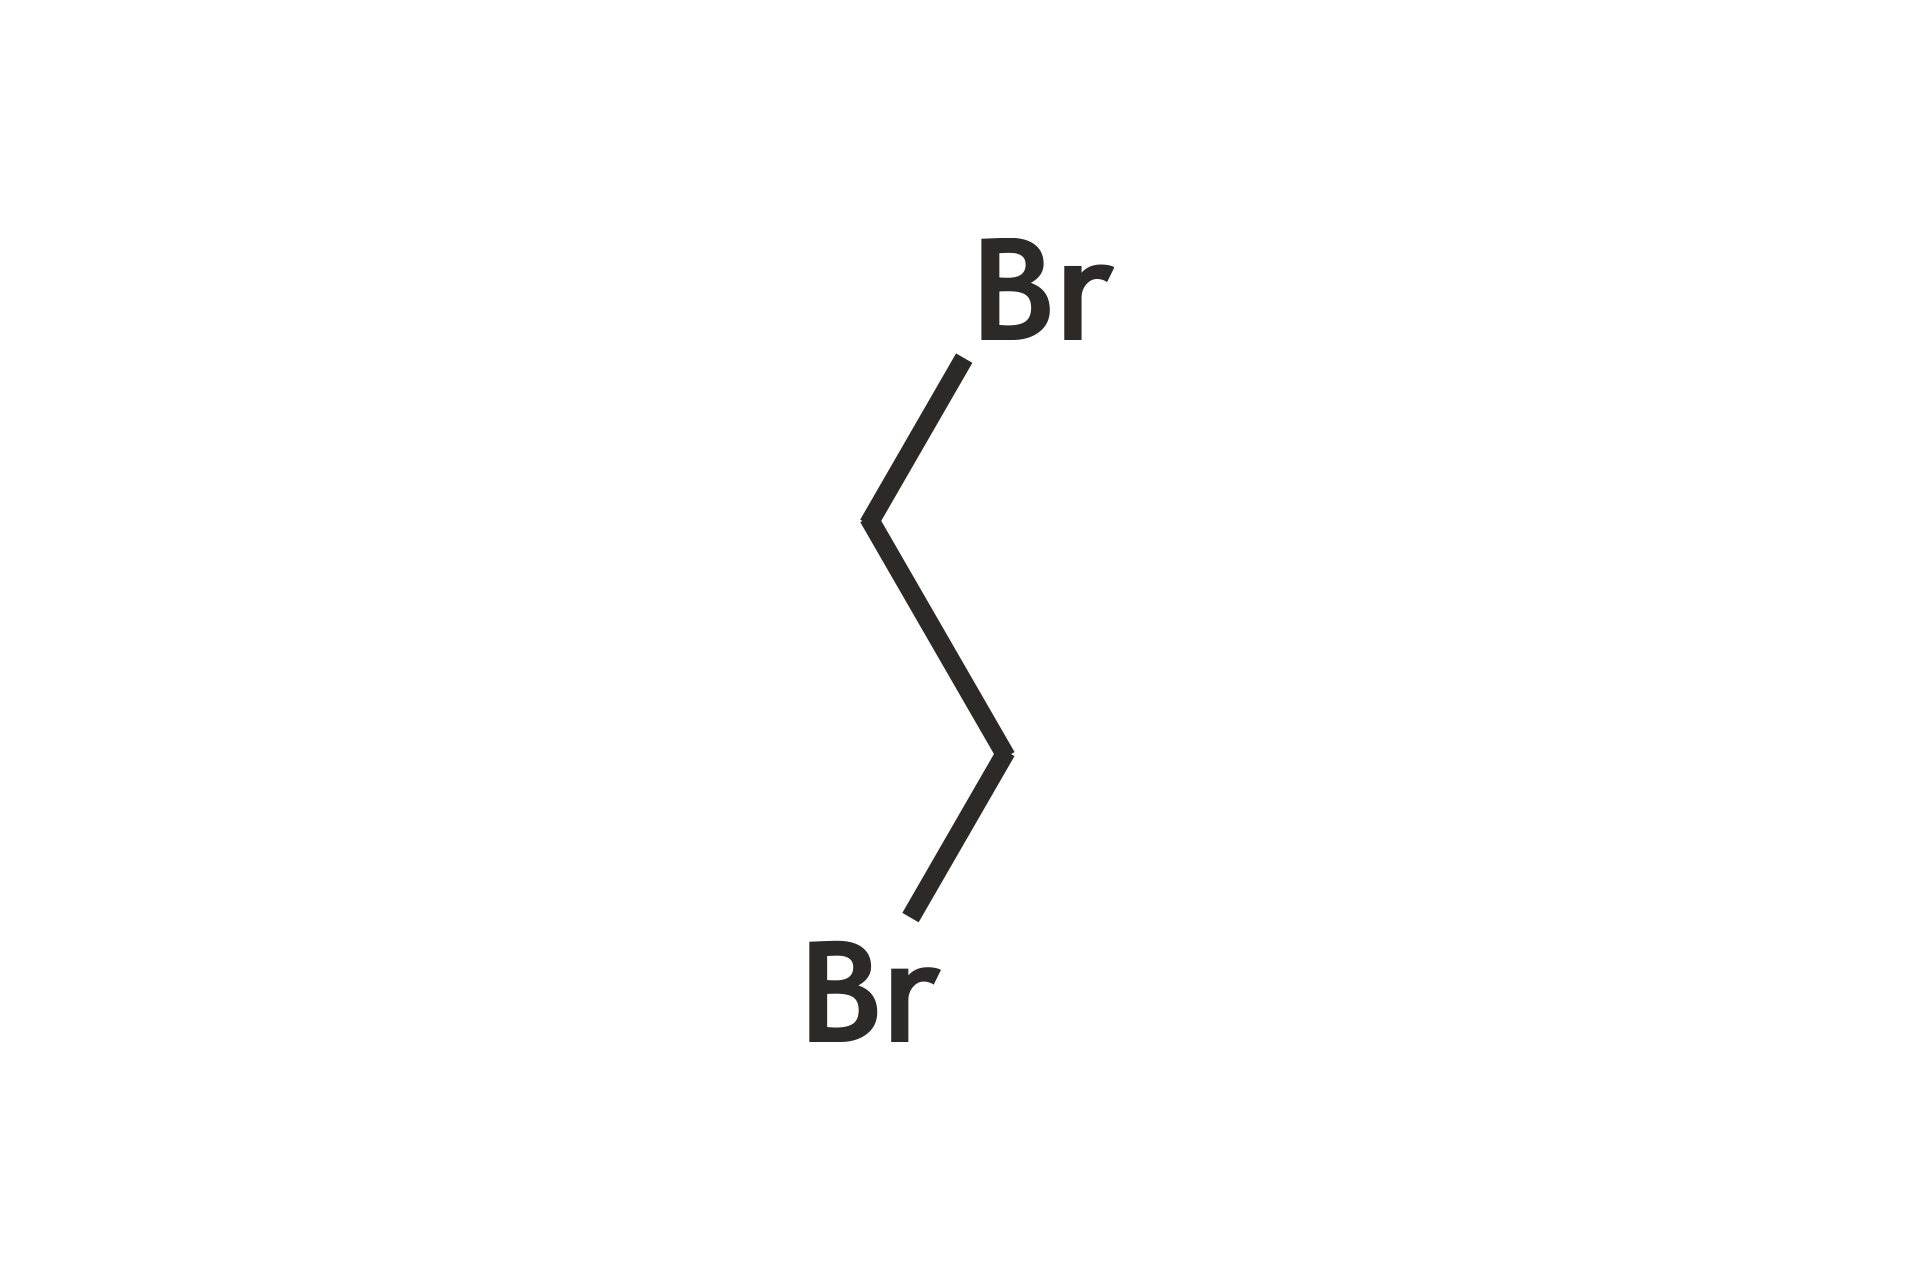 1 1 дибромэтан этаналь. 1 2 Дибромэтан. 1 Фенил 1 бромэтан. Этилформиат. Дибромэтан KCN.